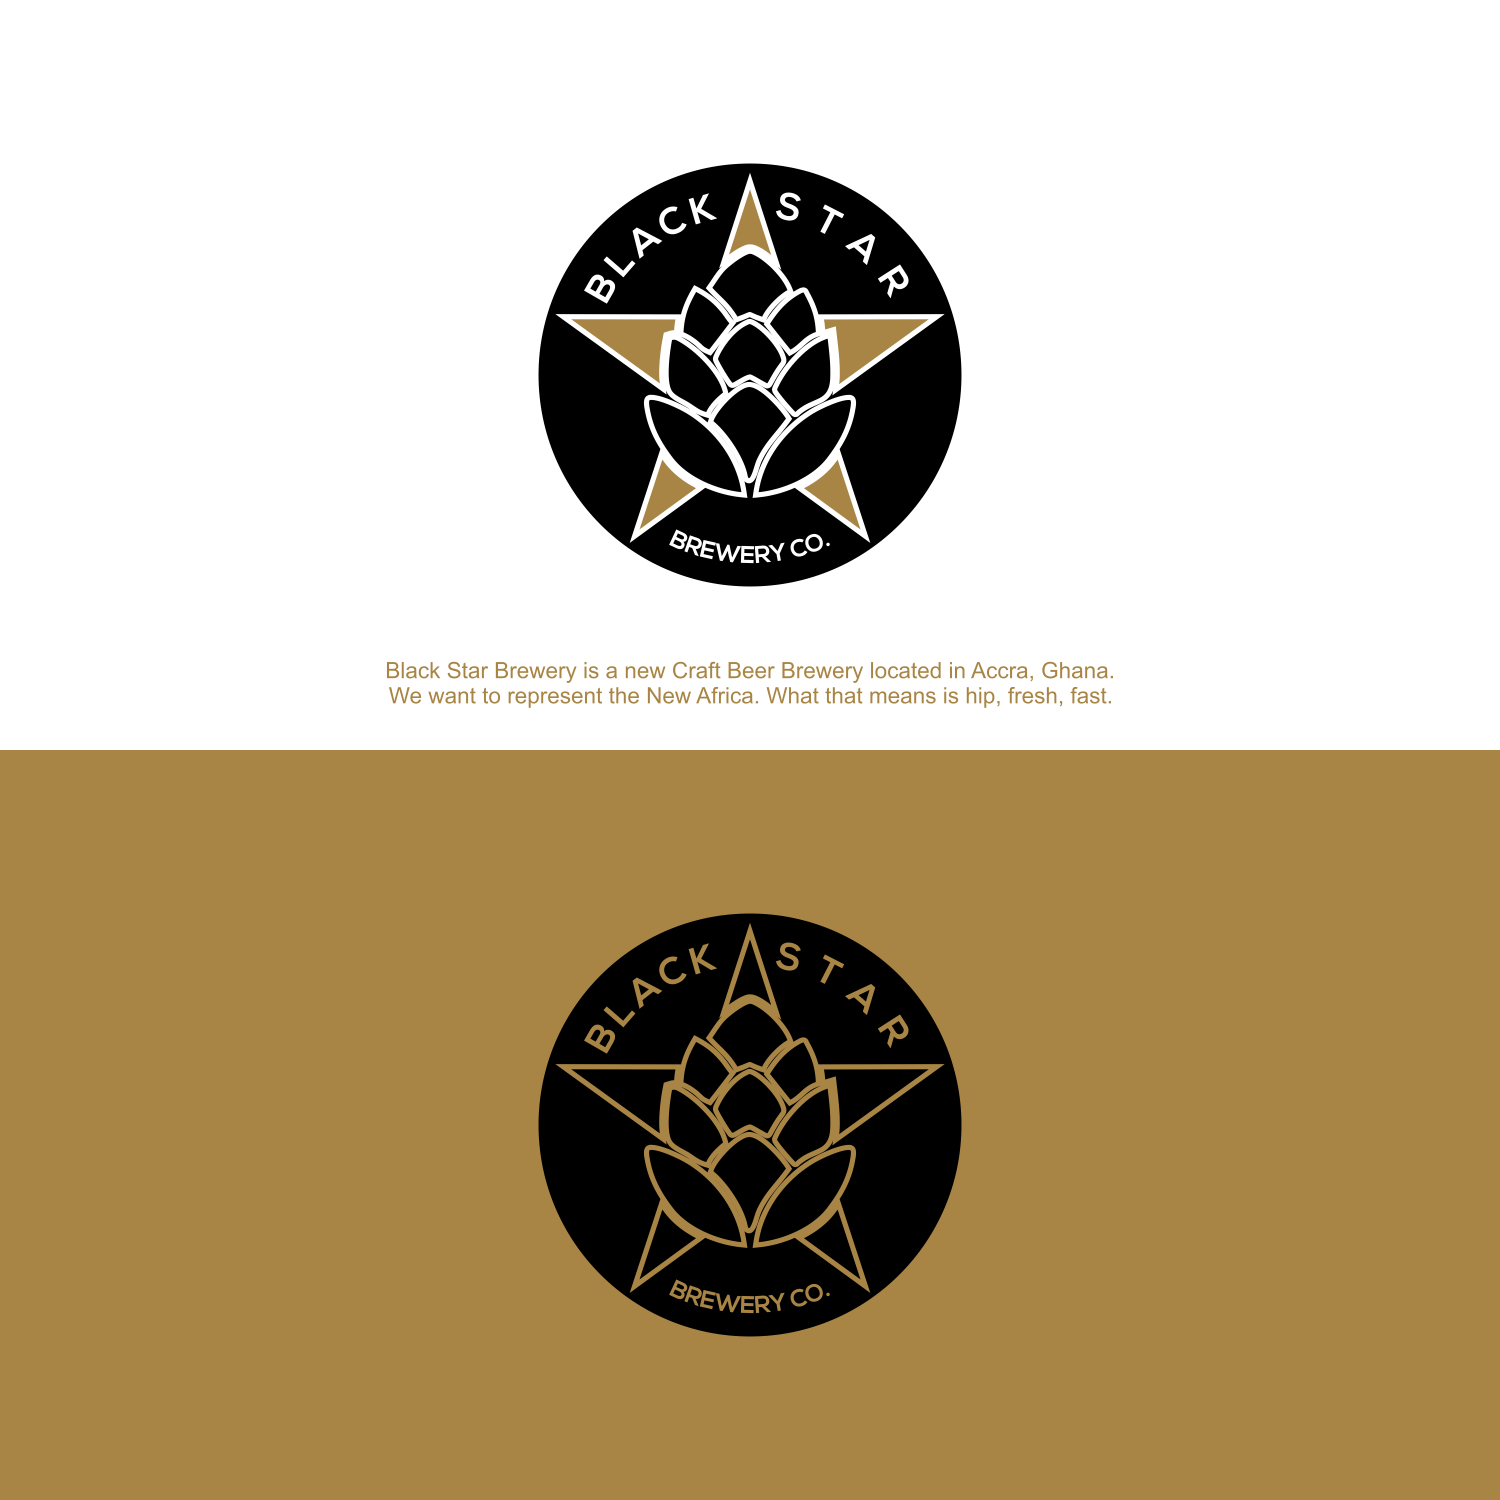 Black Star in Circle Company Logo - Logo Design for Black Star Brewery Co. by SARMONOX | Design #20618323